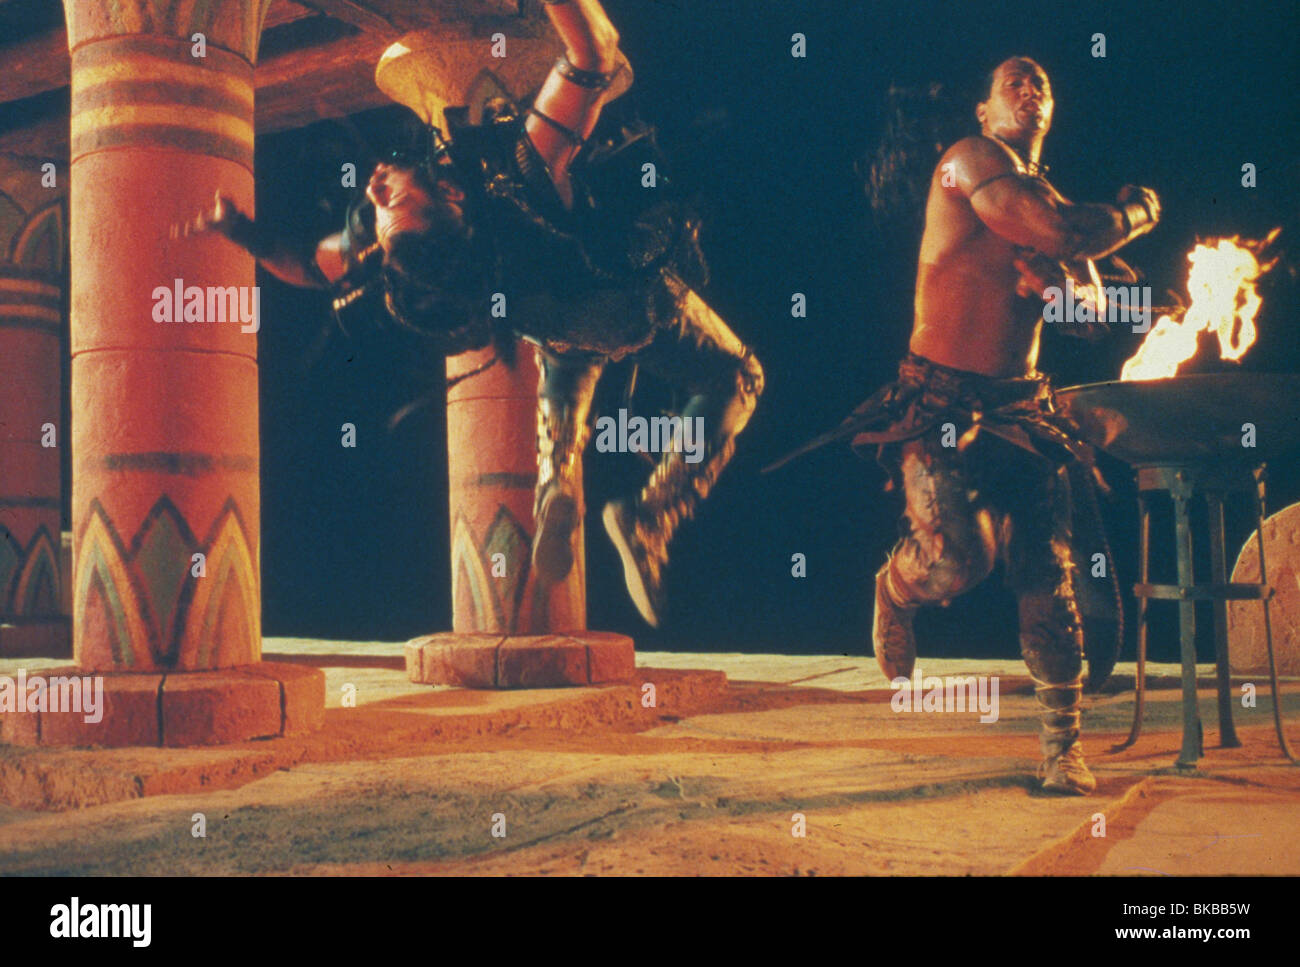 THE SCORPION KING (2002) THE MUMMY 3 (ALT) STEVEN BRAND, DWAYNE JOHNSON (THE ROCK) SPNK 013 Stock Photo